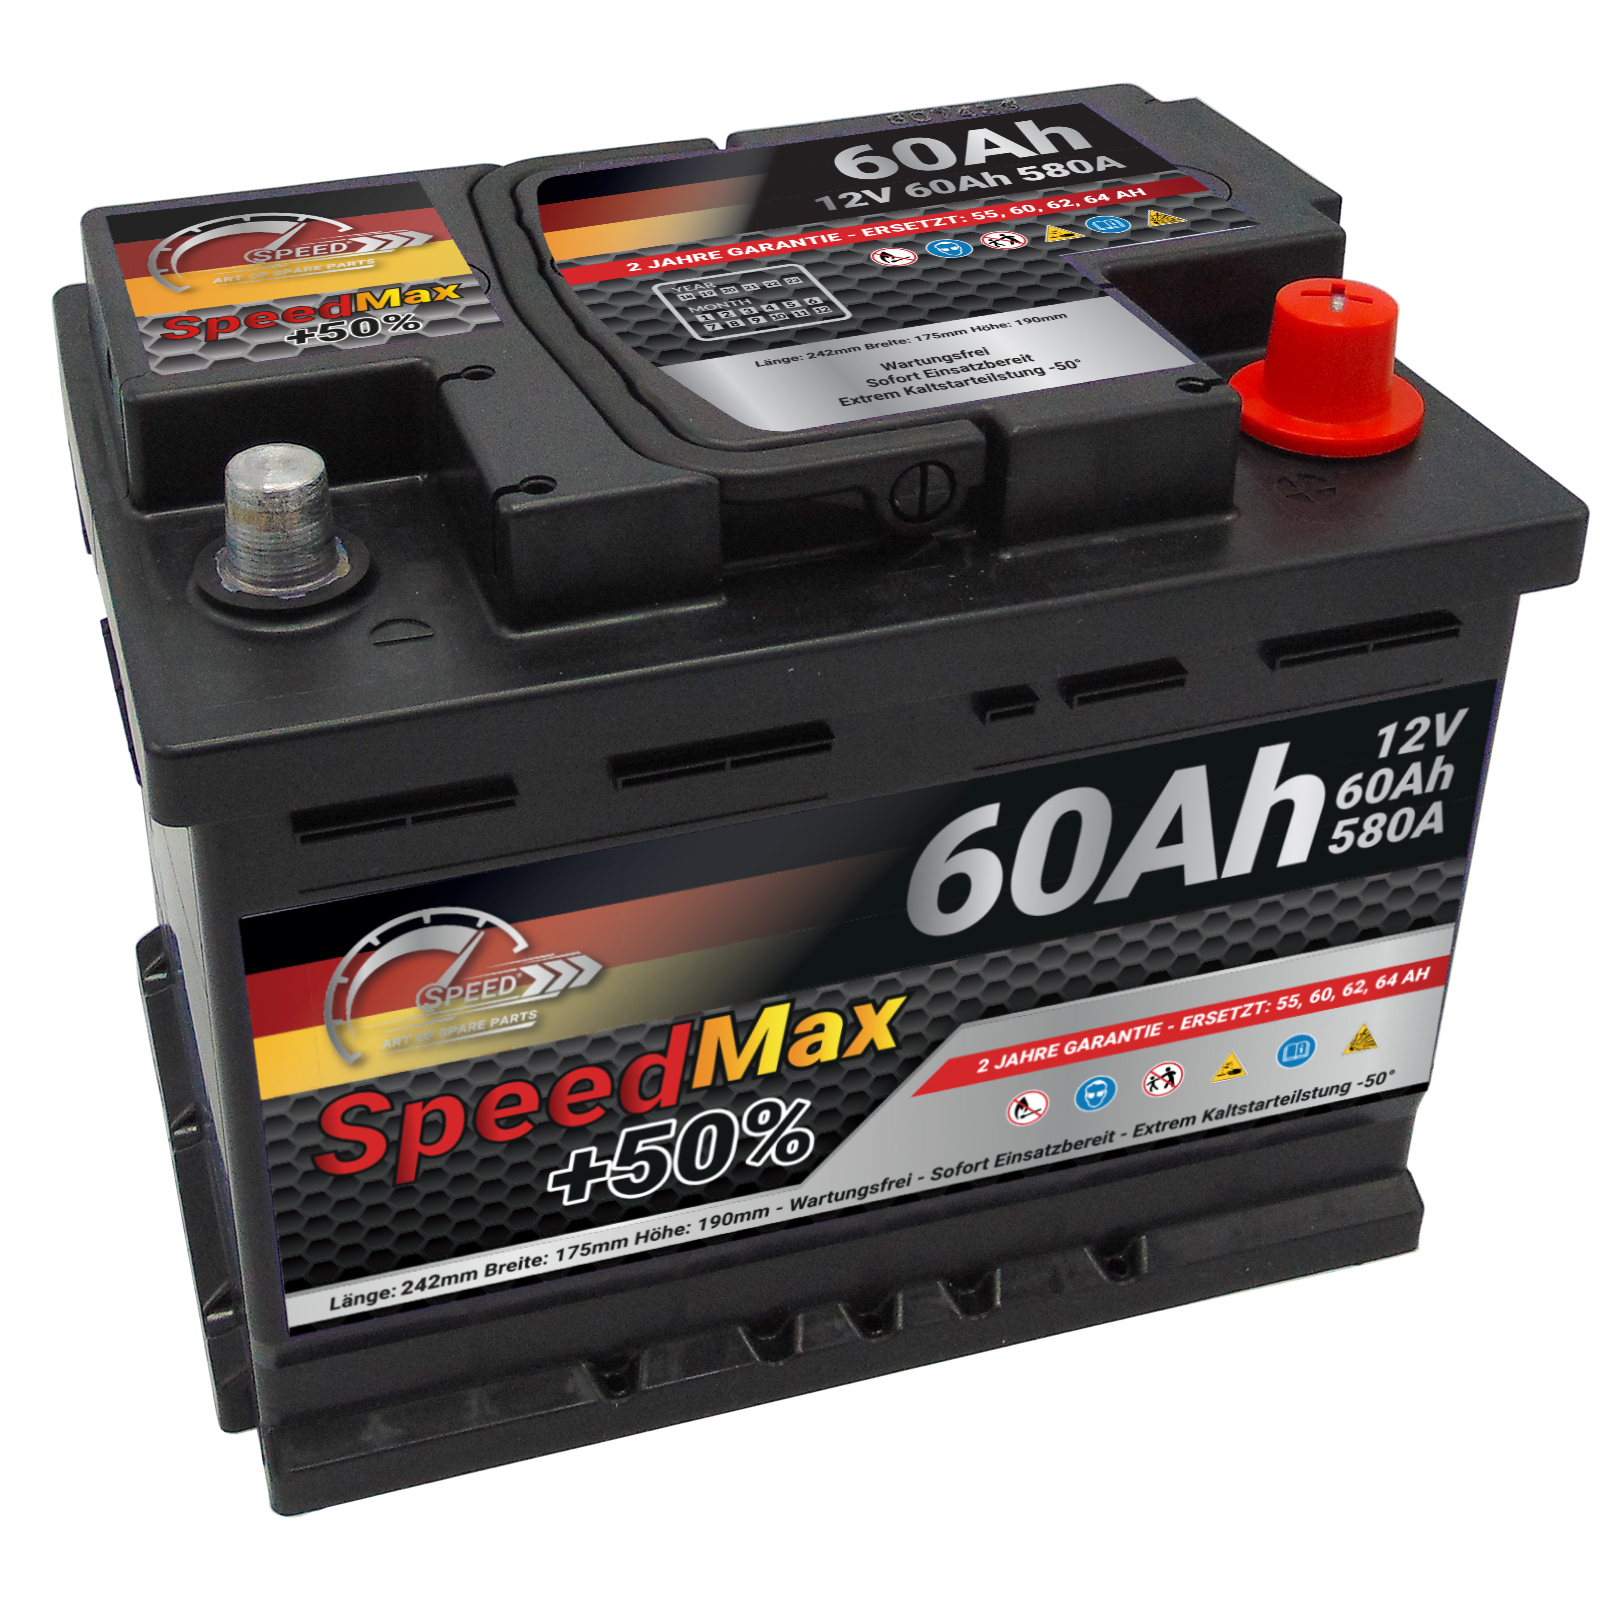 Batteria auto SPEED MAX 60Ah 580A 12V +50% - Ricambi auto SMC